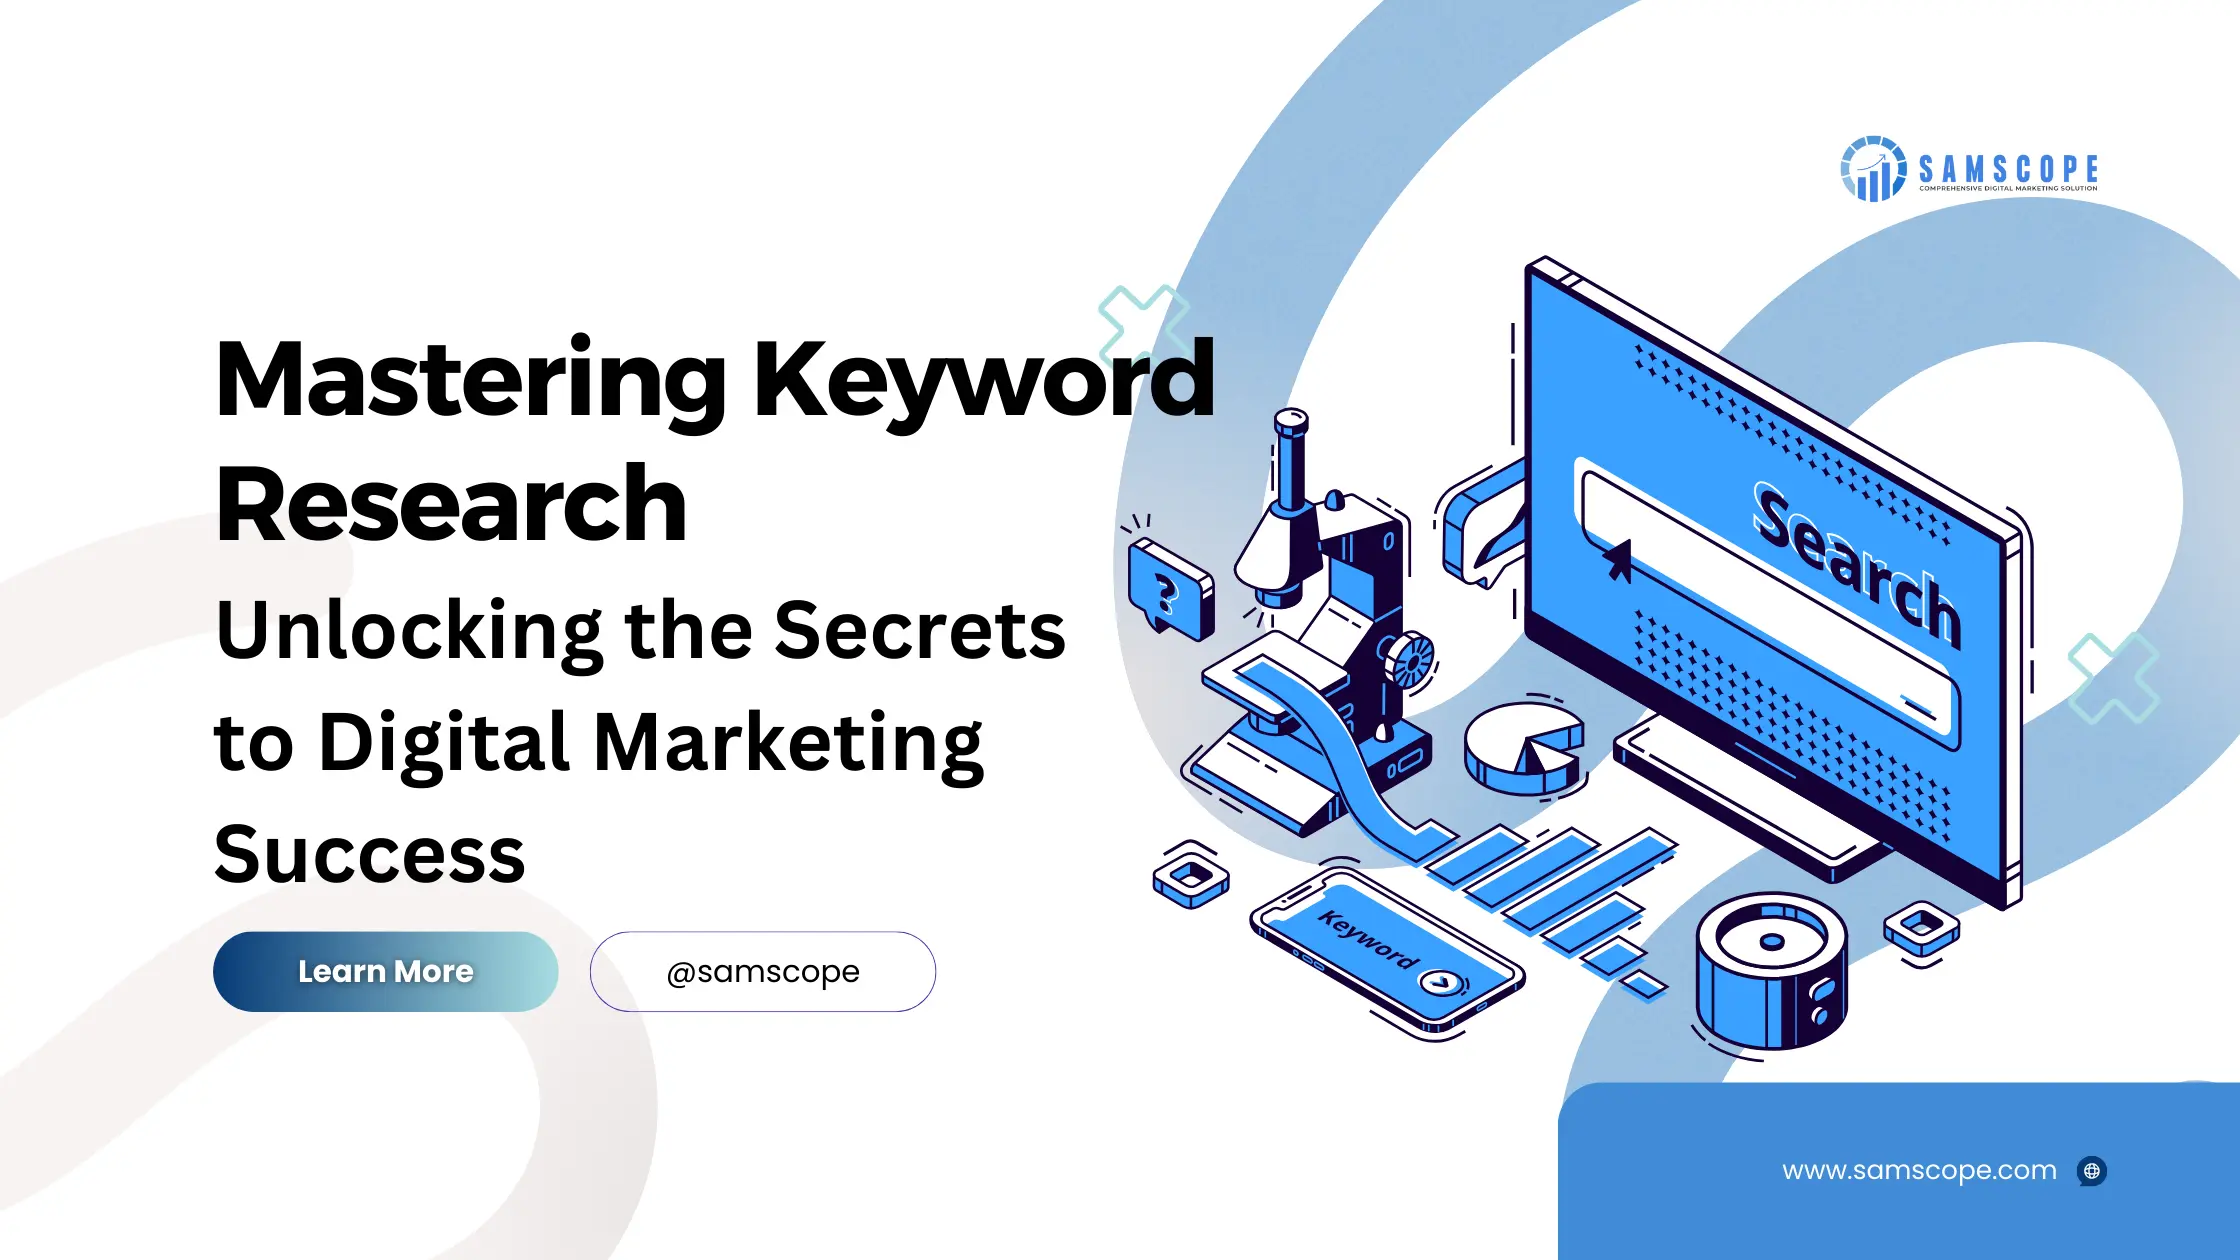 Mastering Keyword Research: Unlocking Digital Marketing Secrets